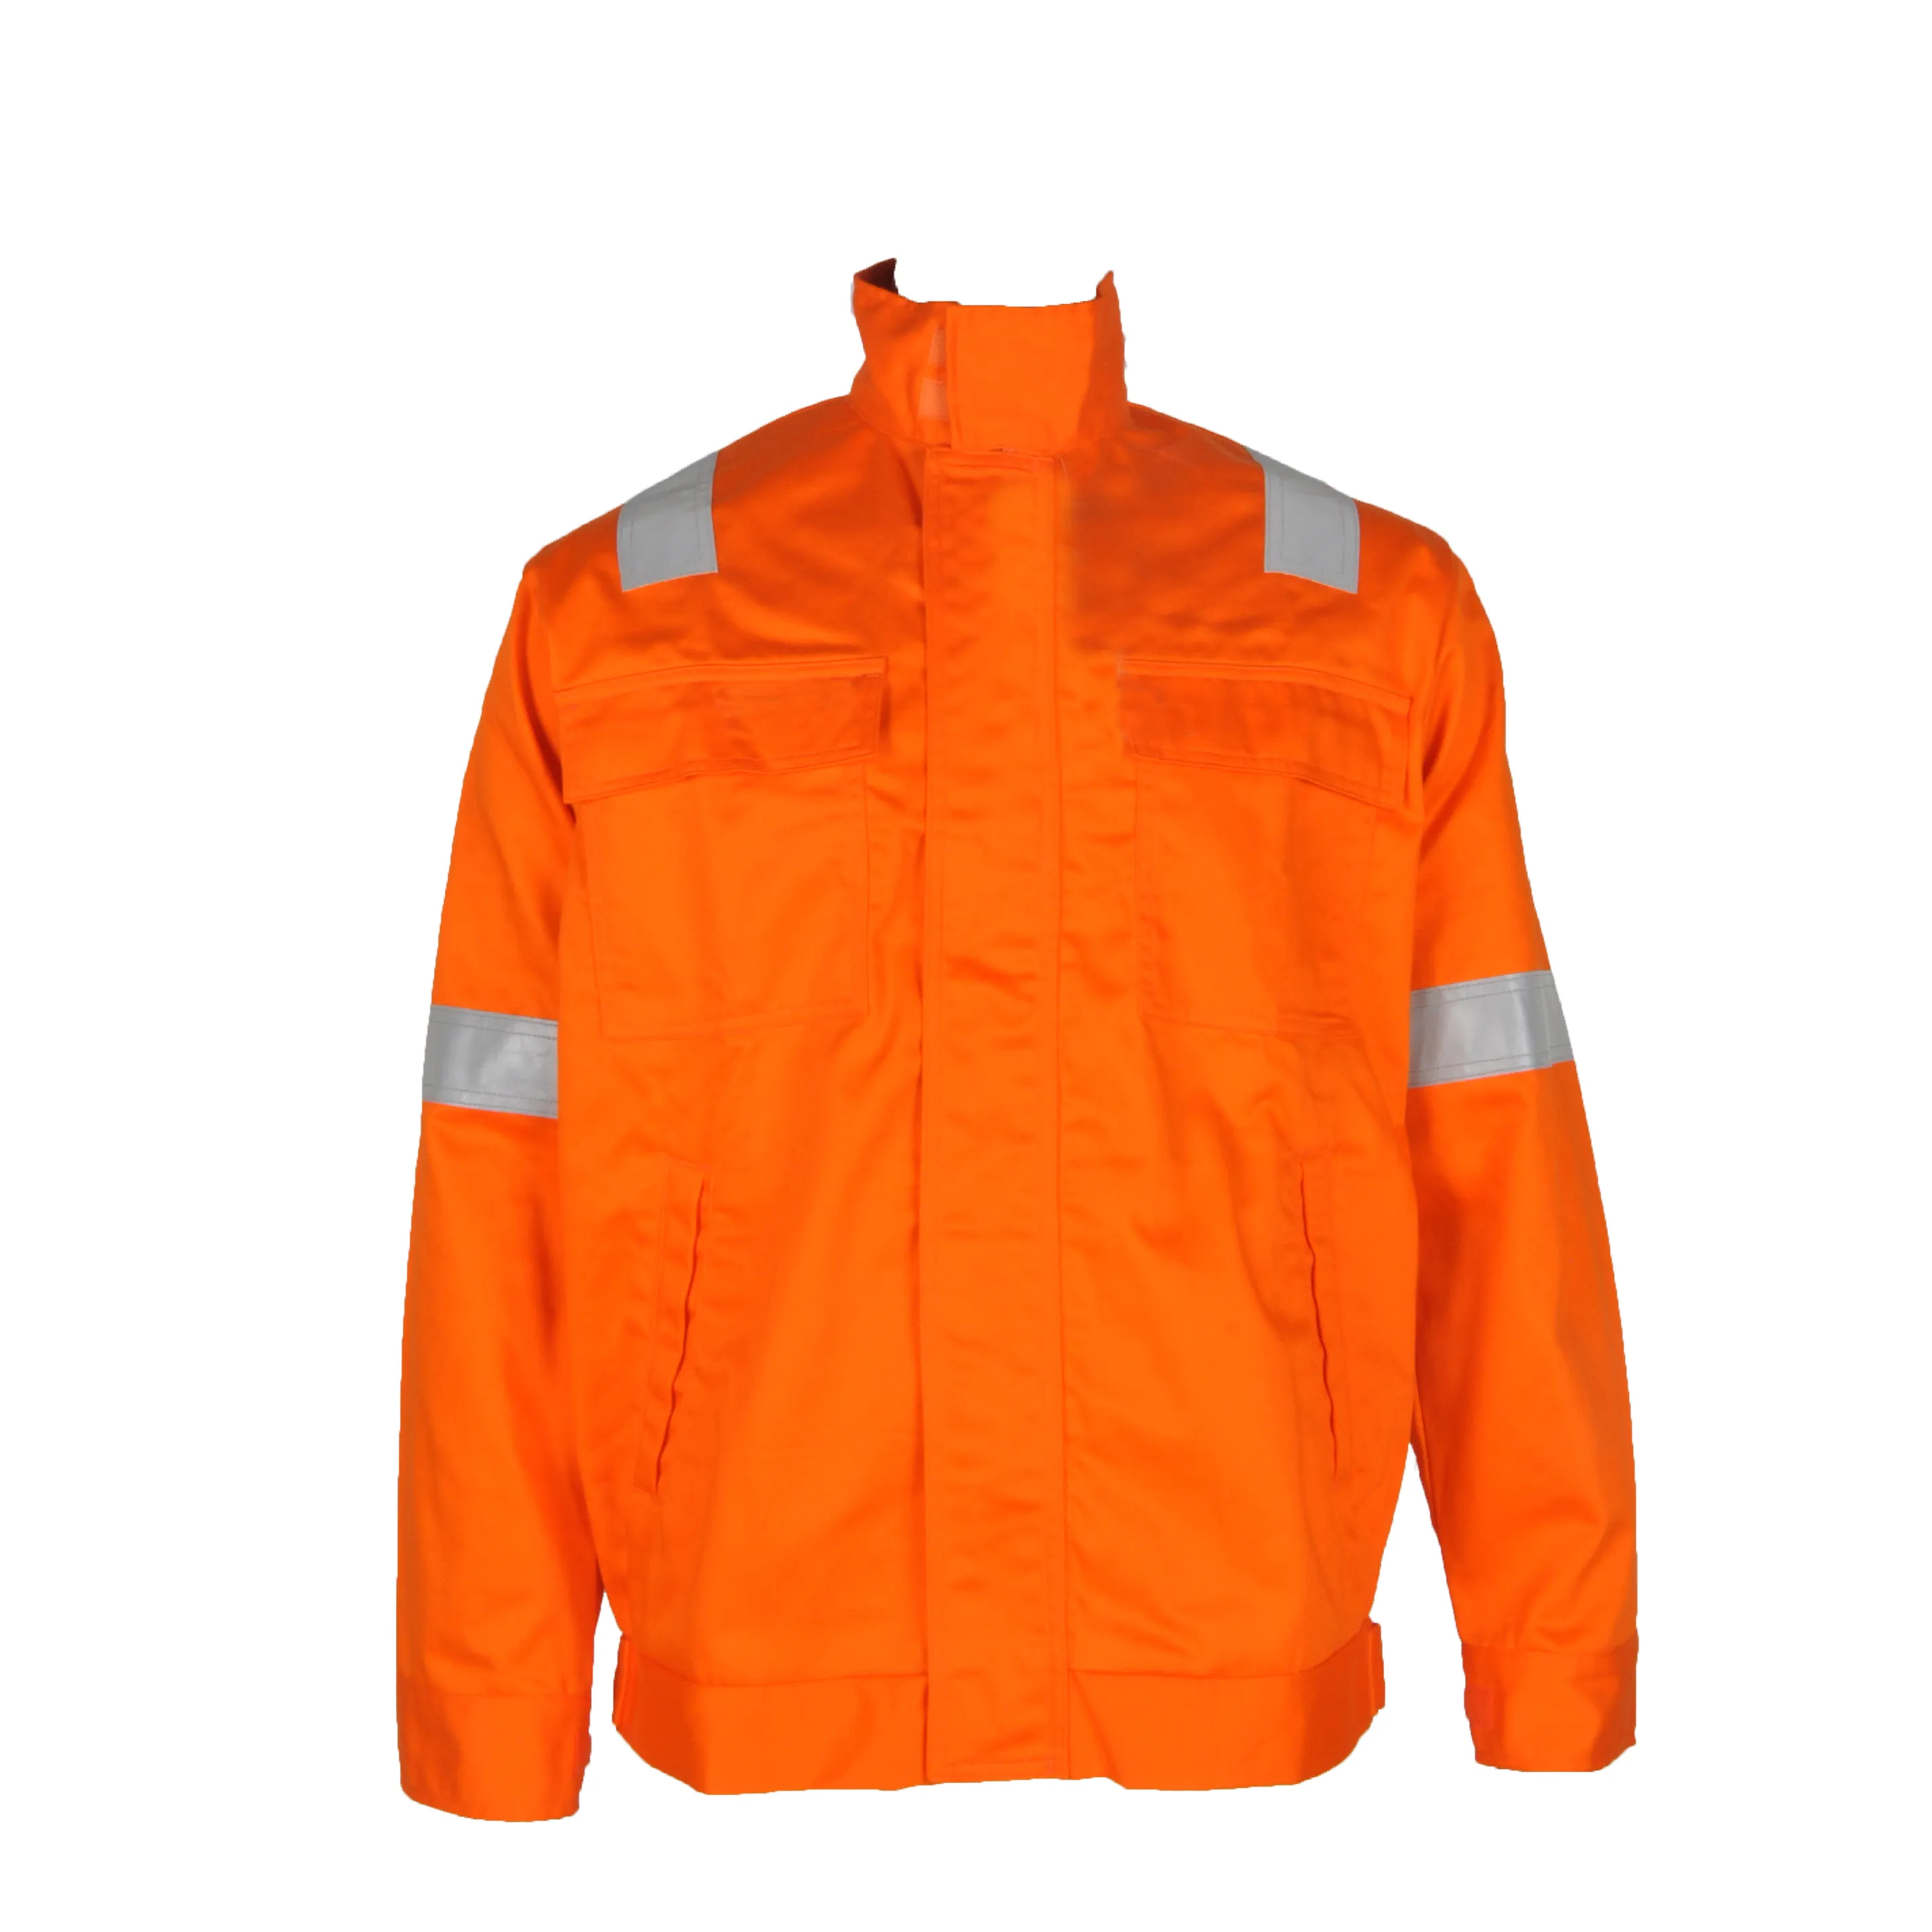 Manufacture flame resistant Men's Safety Work uniform FR construction worker Jacket